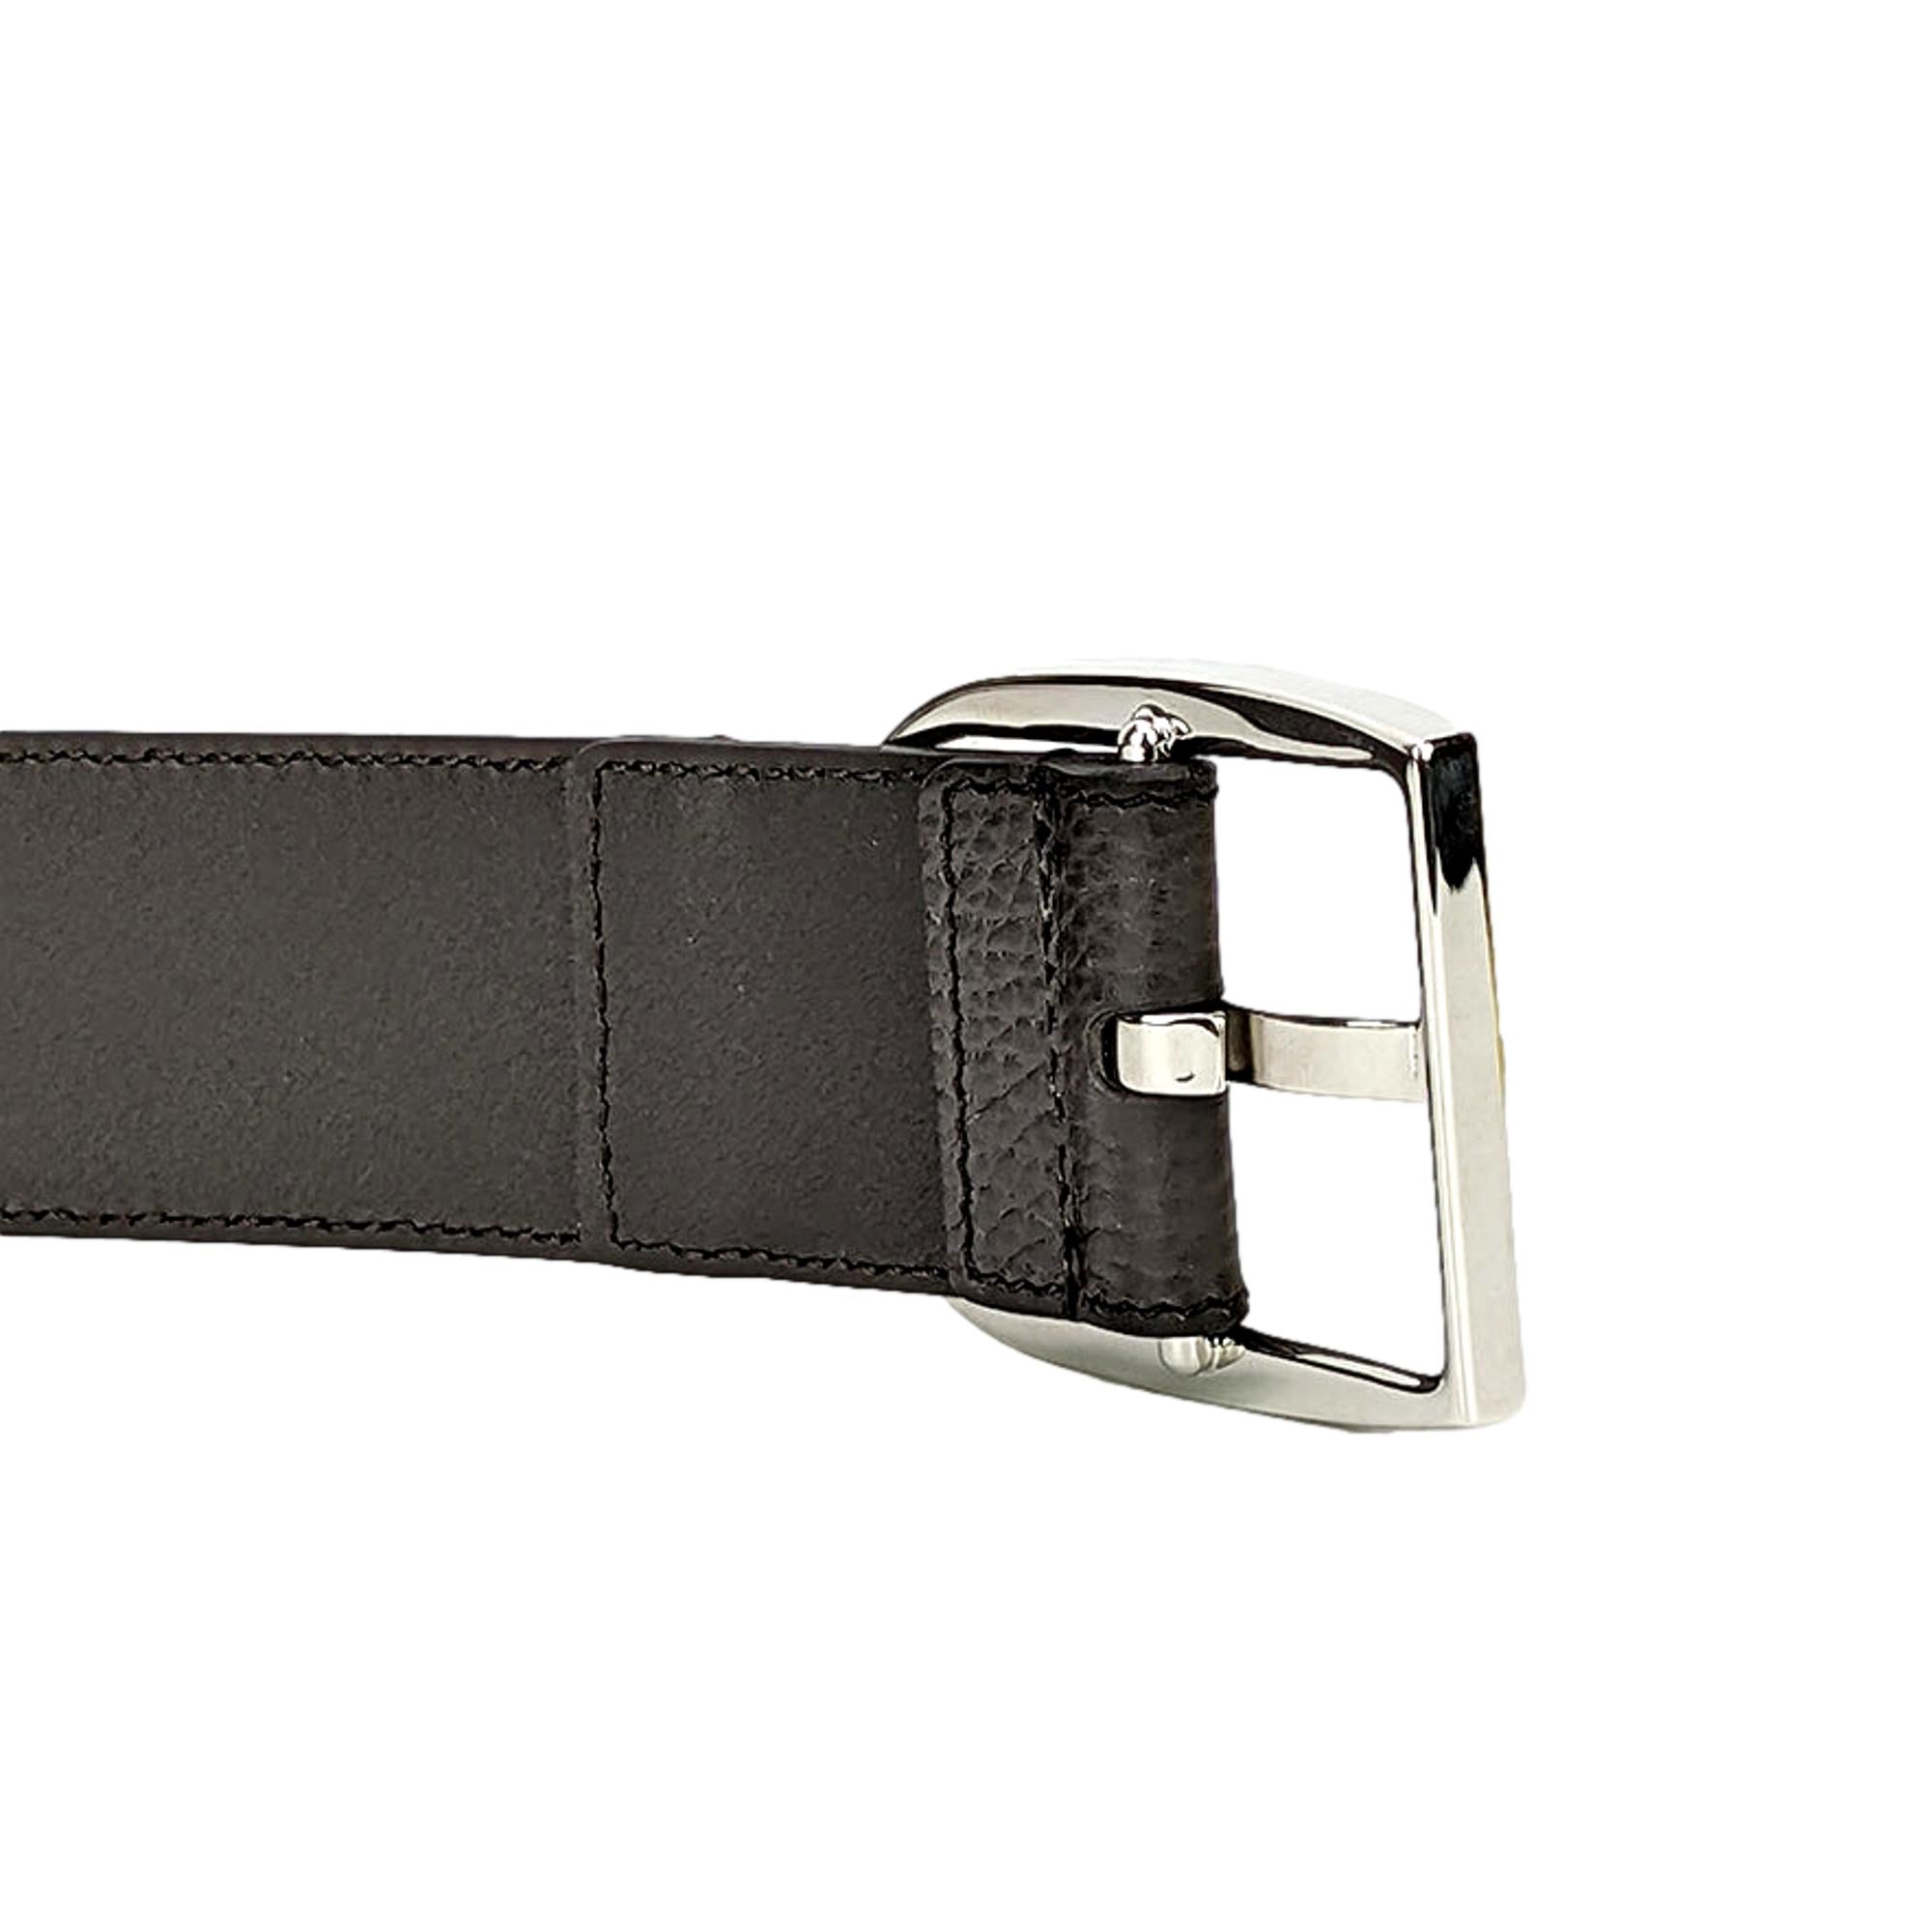 Gucci Guccisssima Brown and Beige Canvas Leather Trim Belt Size 100/40